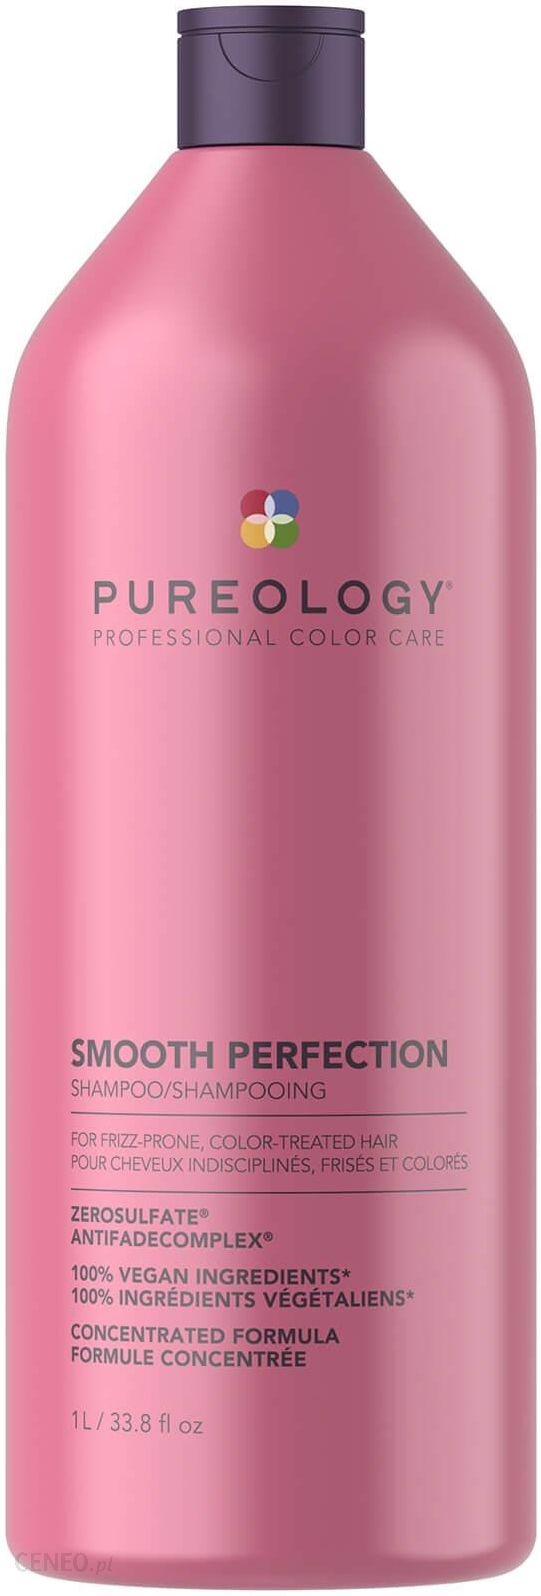 pureology szampon 1litr cena